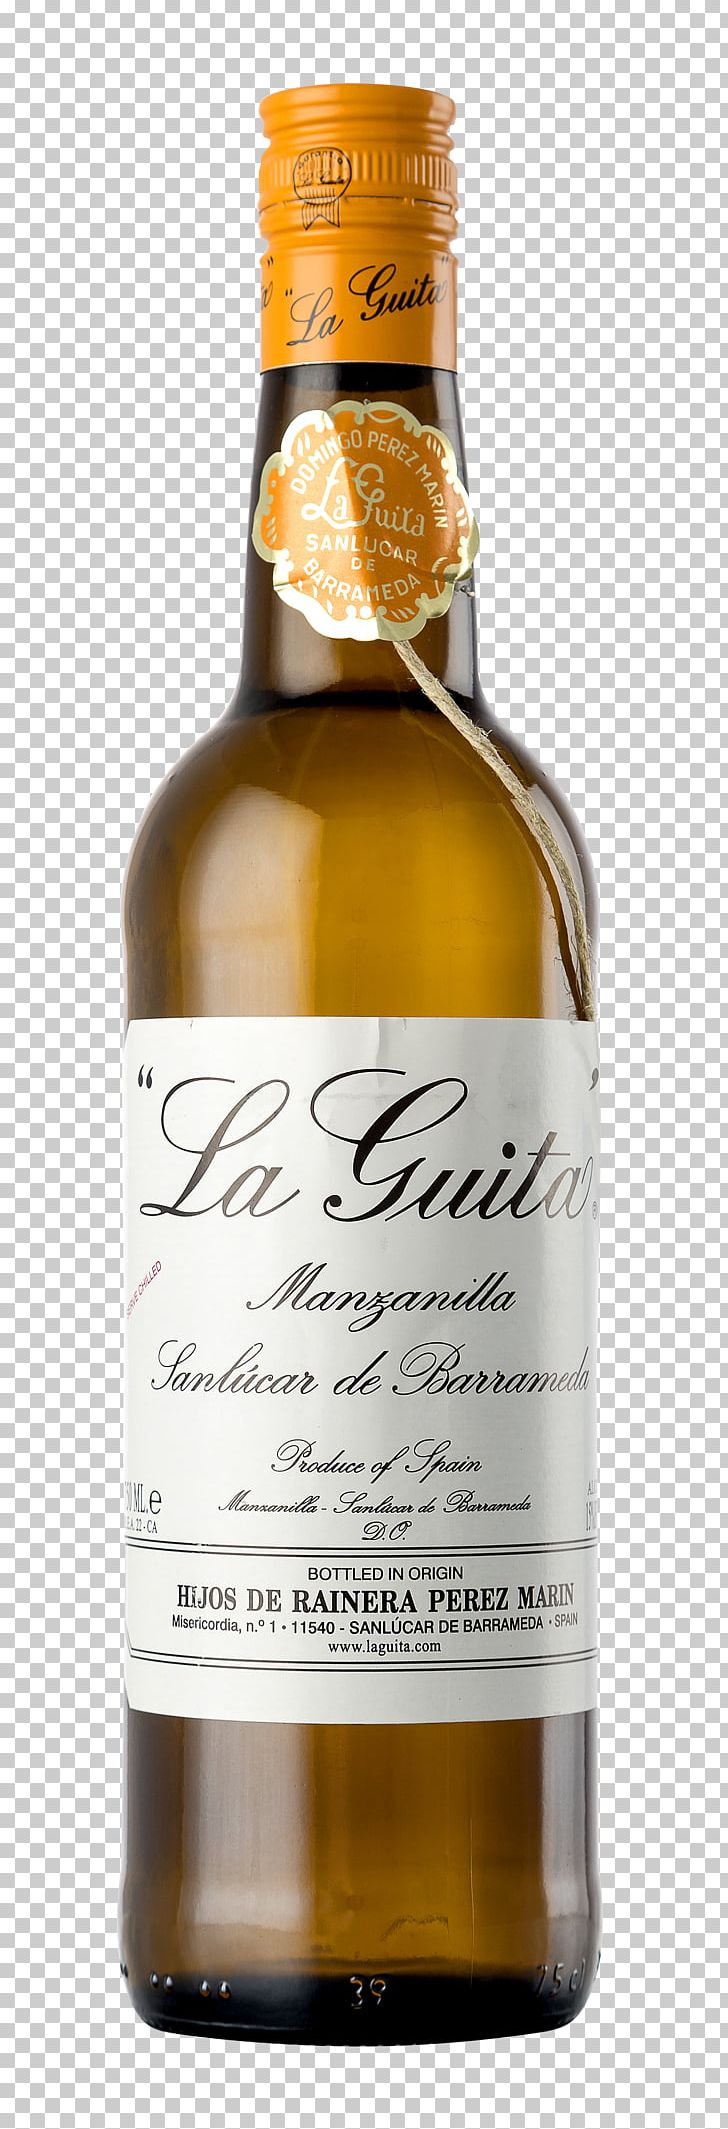 La Guita Liqueur Manzanilla Dessert Wine PNG, Clipart, Alcoholic Beverage, Bottle, Dessert Wine, Distilled Beverage, Drink Free PNG Download